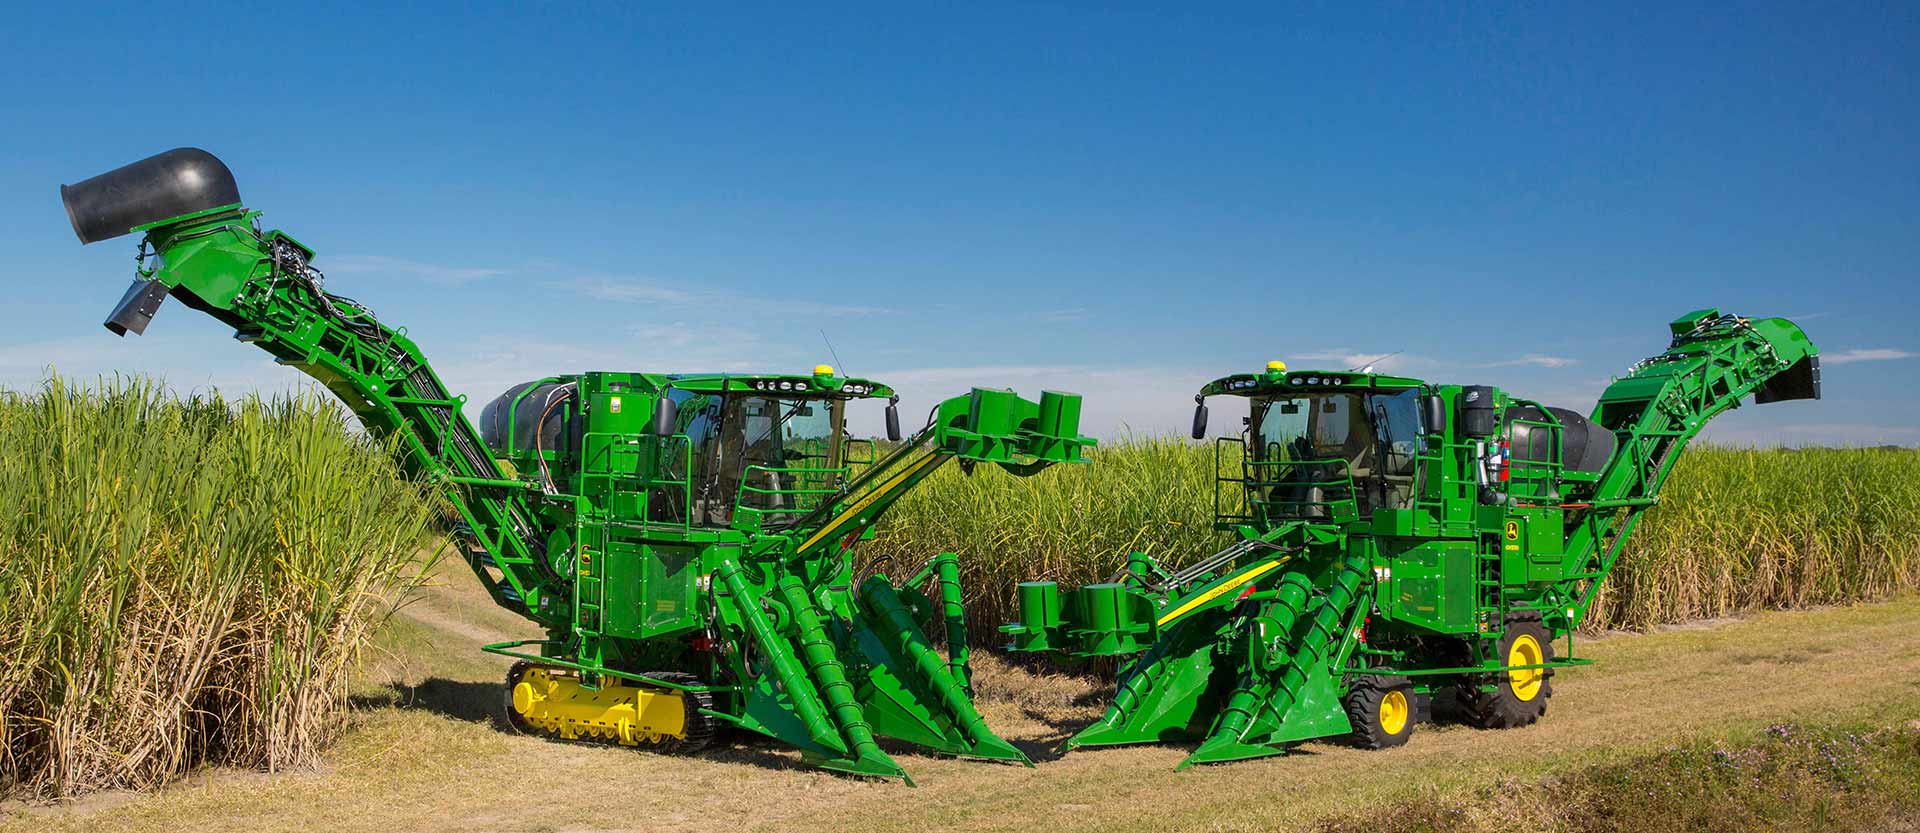 John Deere X9 combine harvesting wheat